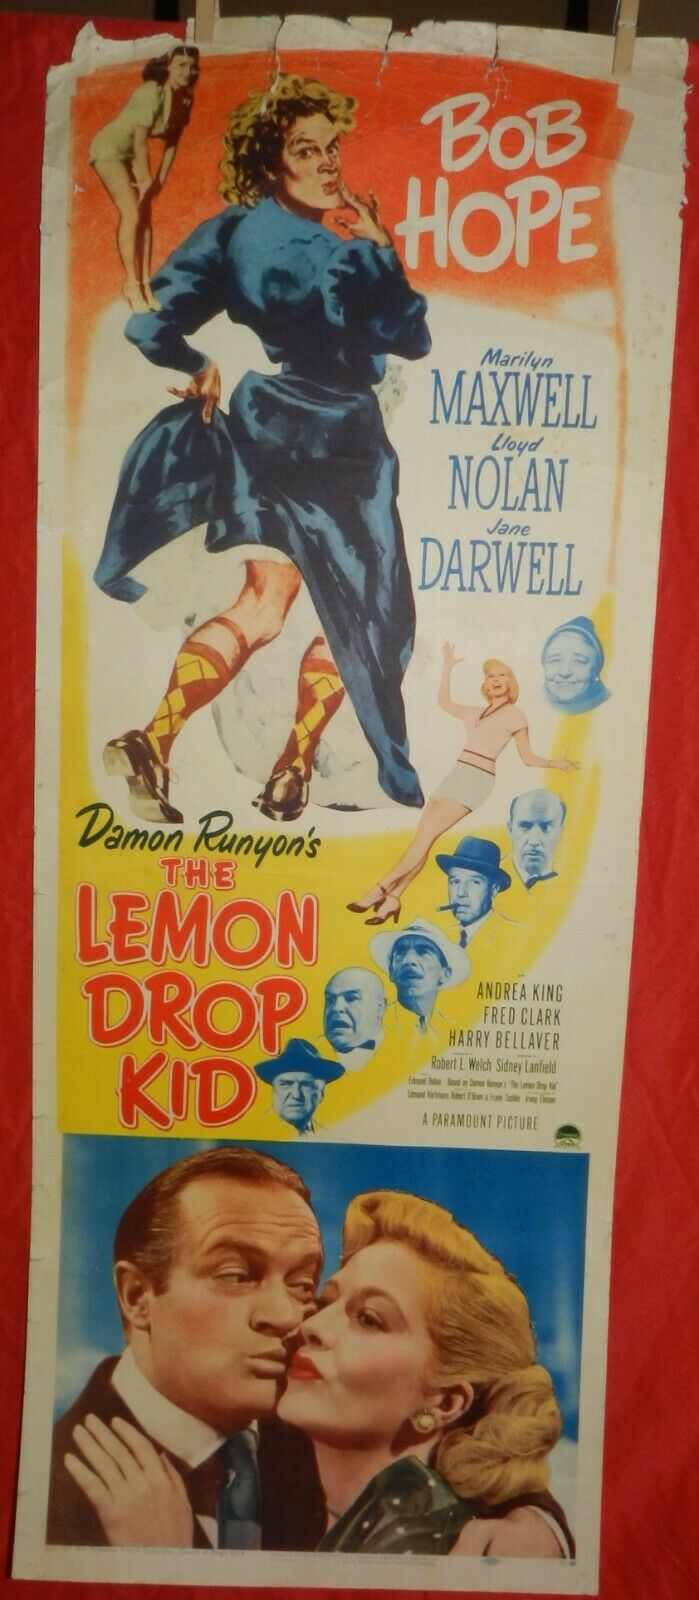 1 Vintage Insert Movie Poster For The Lemon Drop Kid, 1951, Bob Hope, M. Maxwell